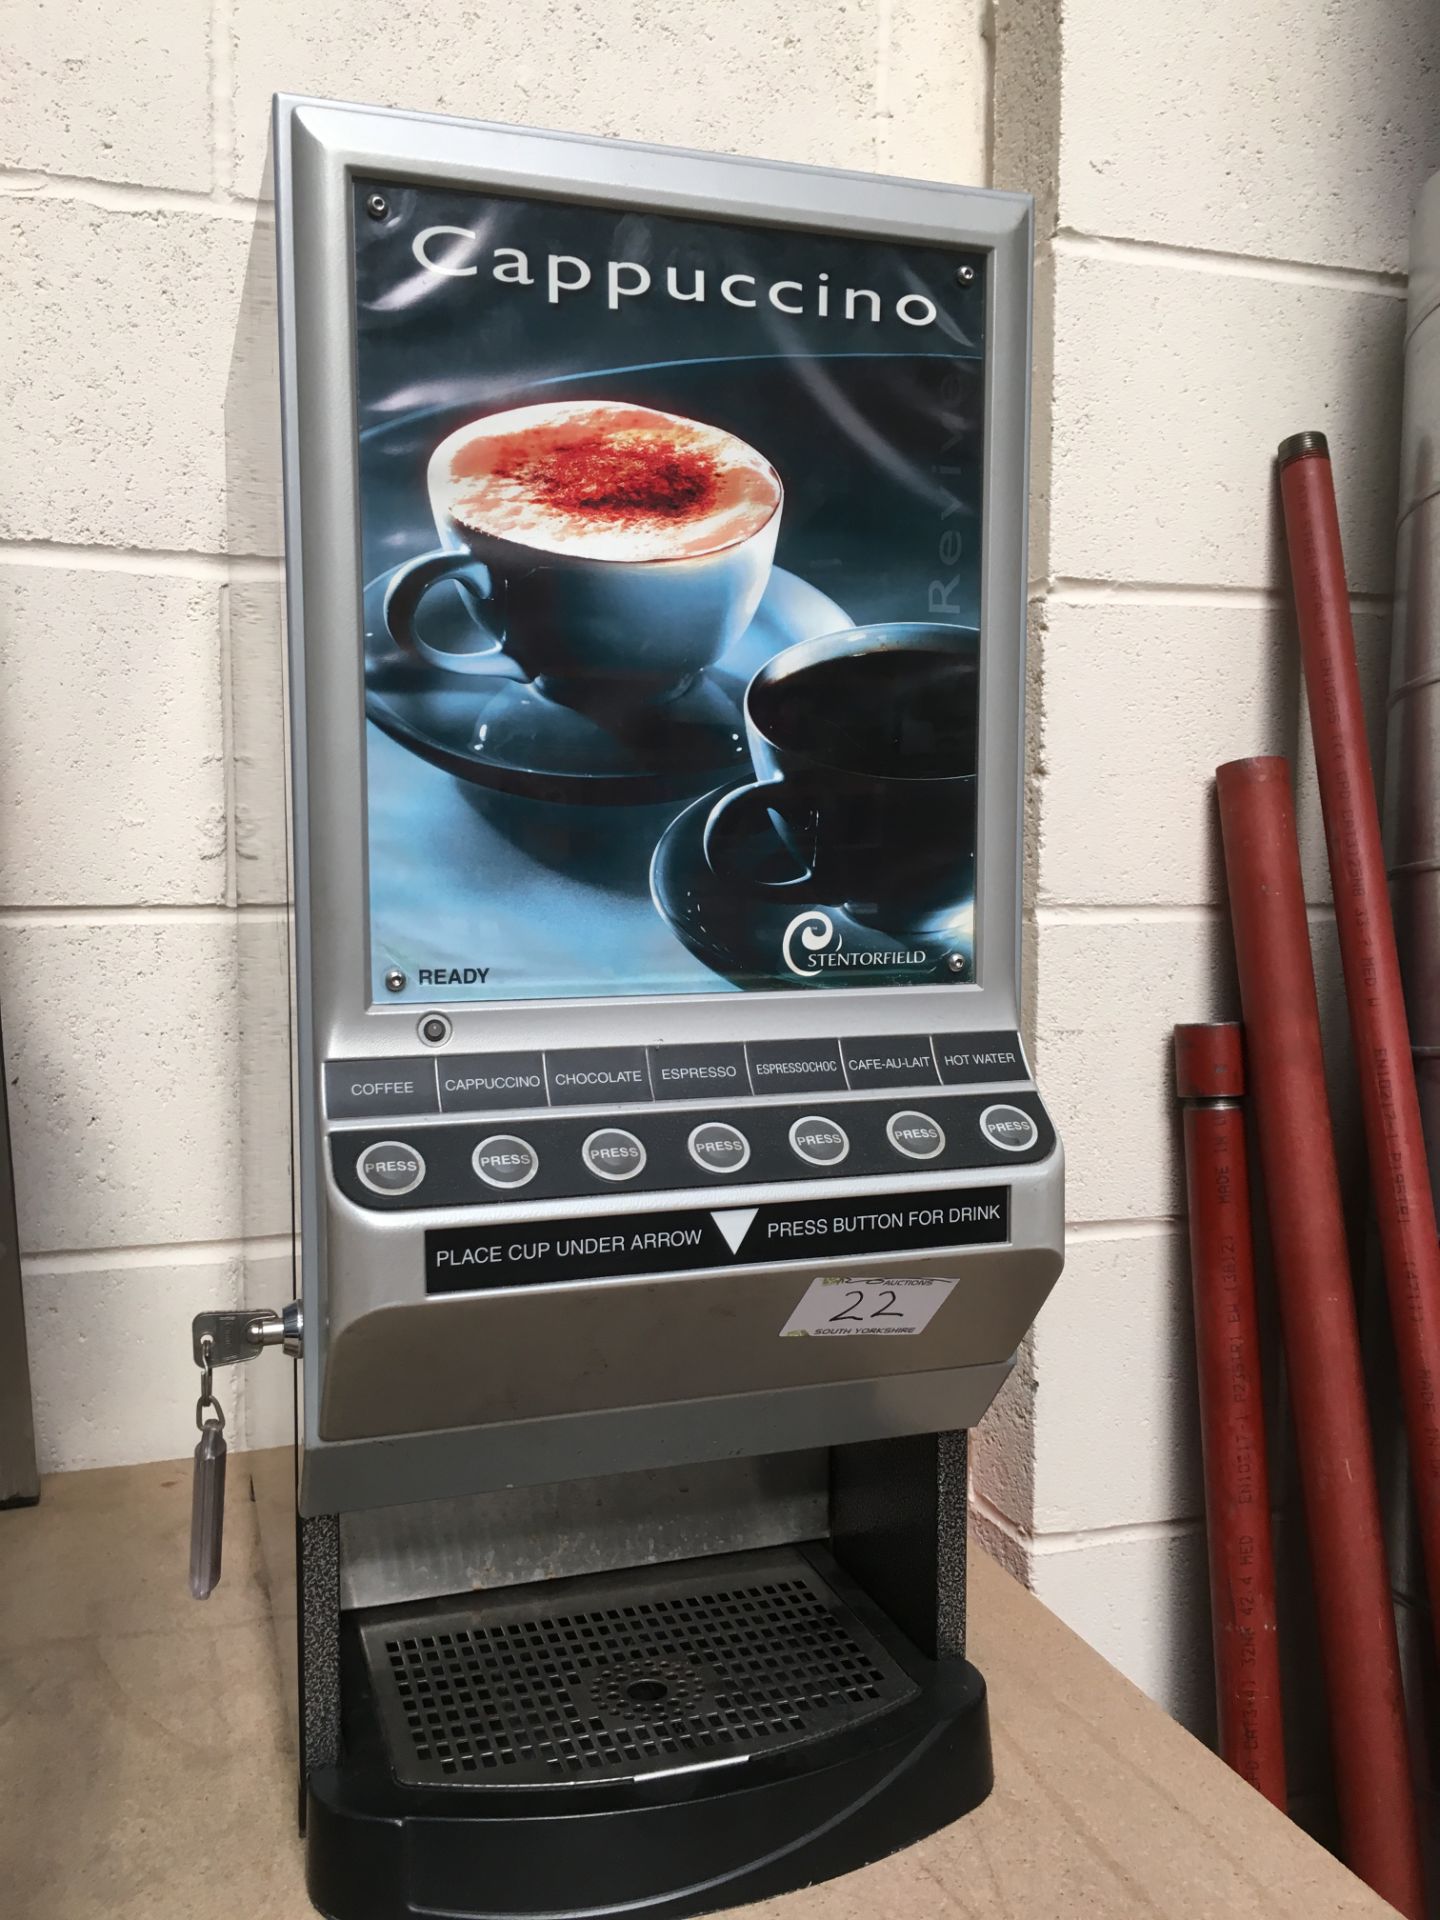 Stentorfield Cappuccino Coffee Choc Machine